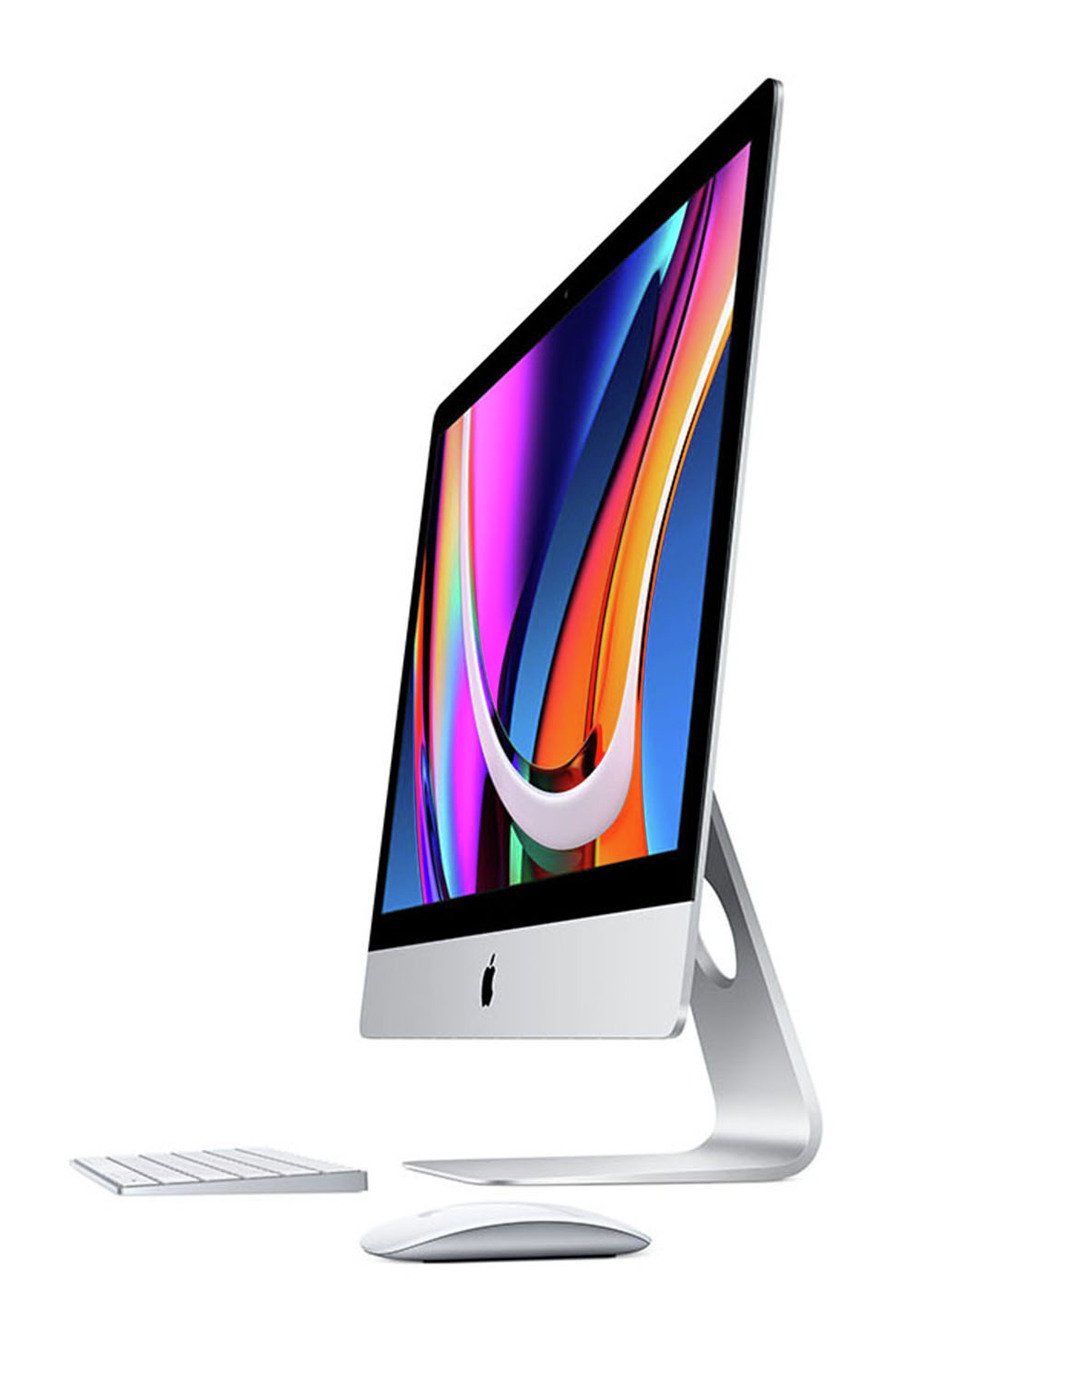 Apple iMac 2020 27in Retina 5K Display i5 8GB 256GB Desktop Review